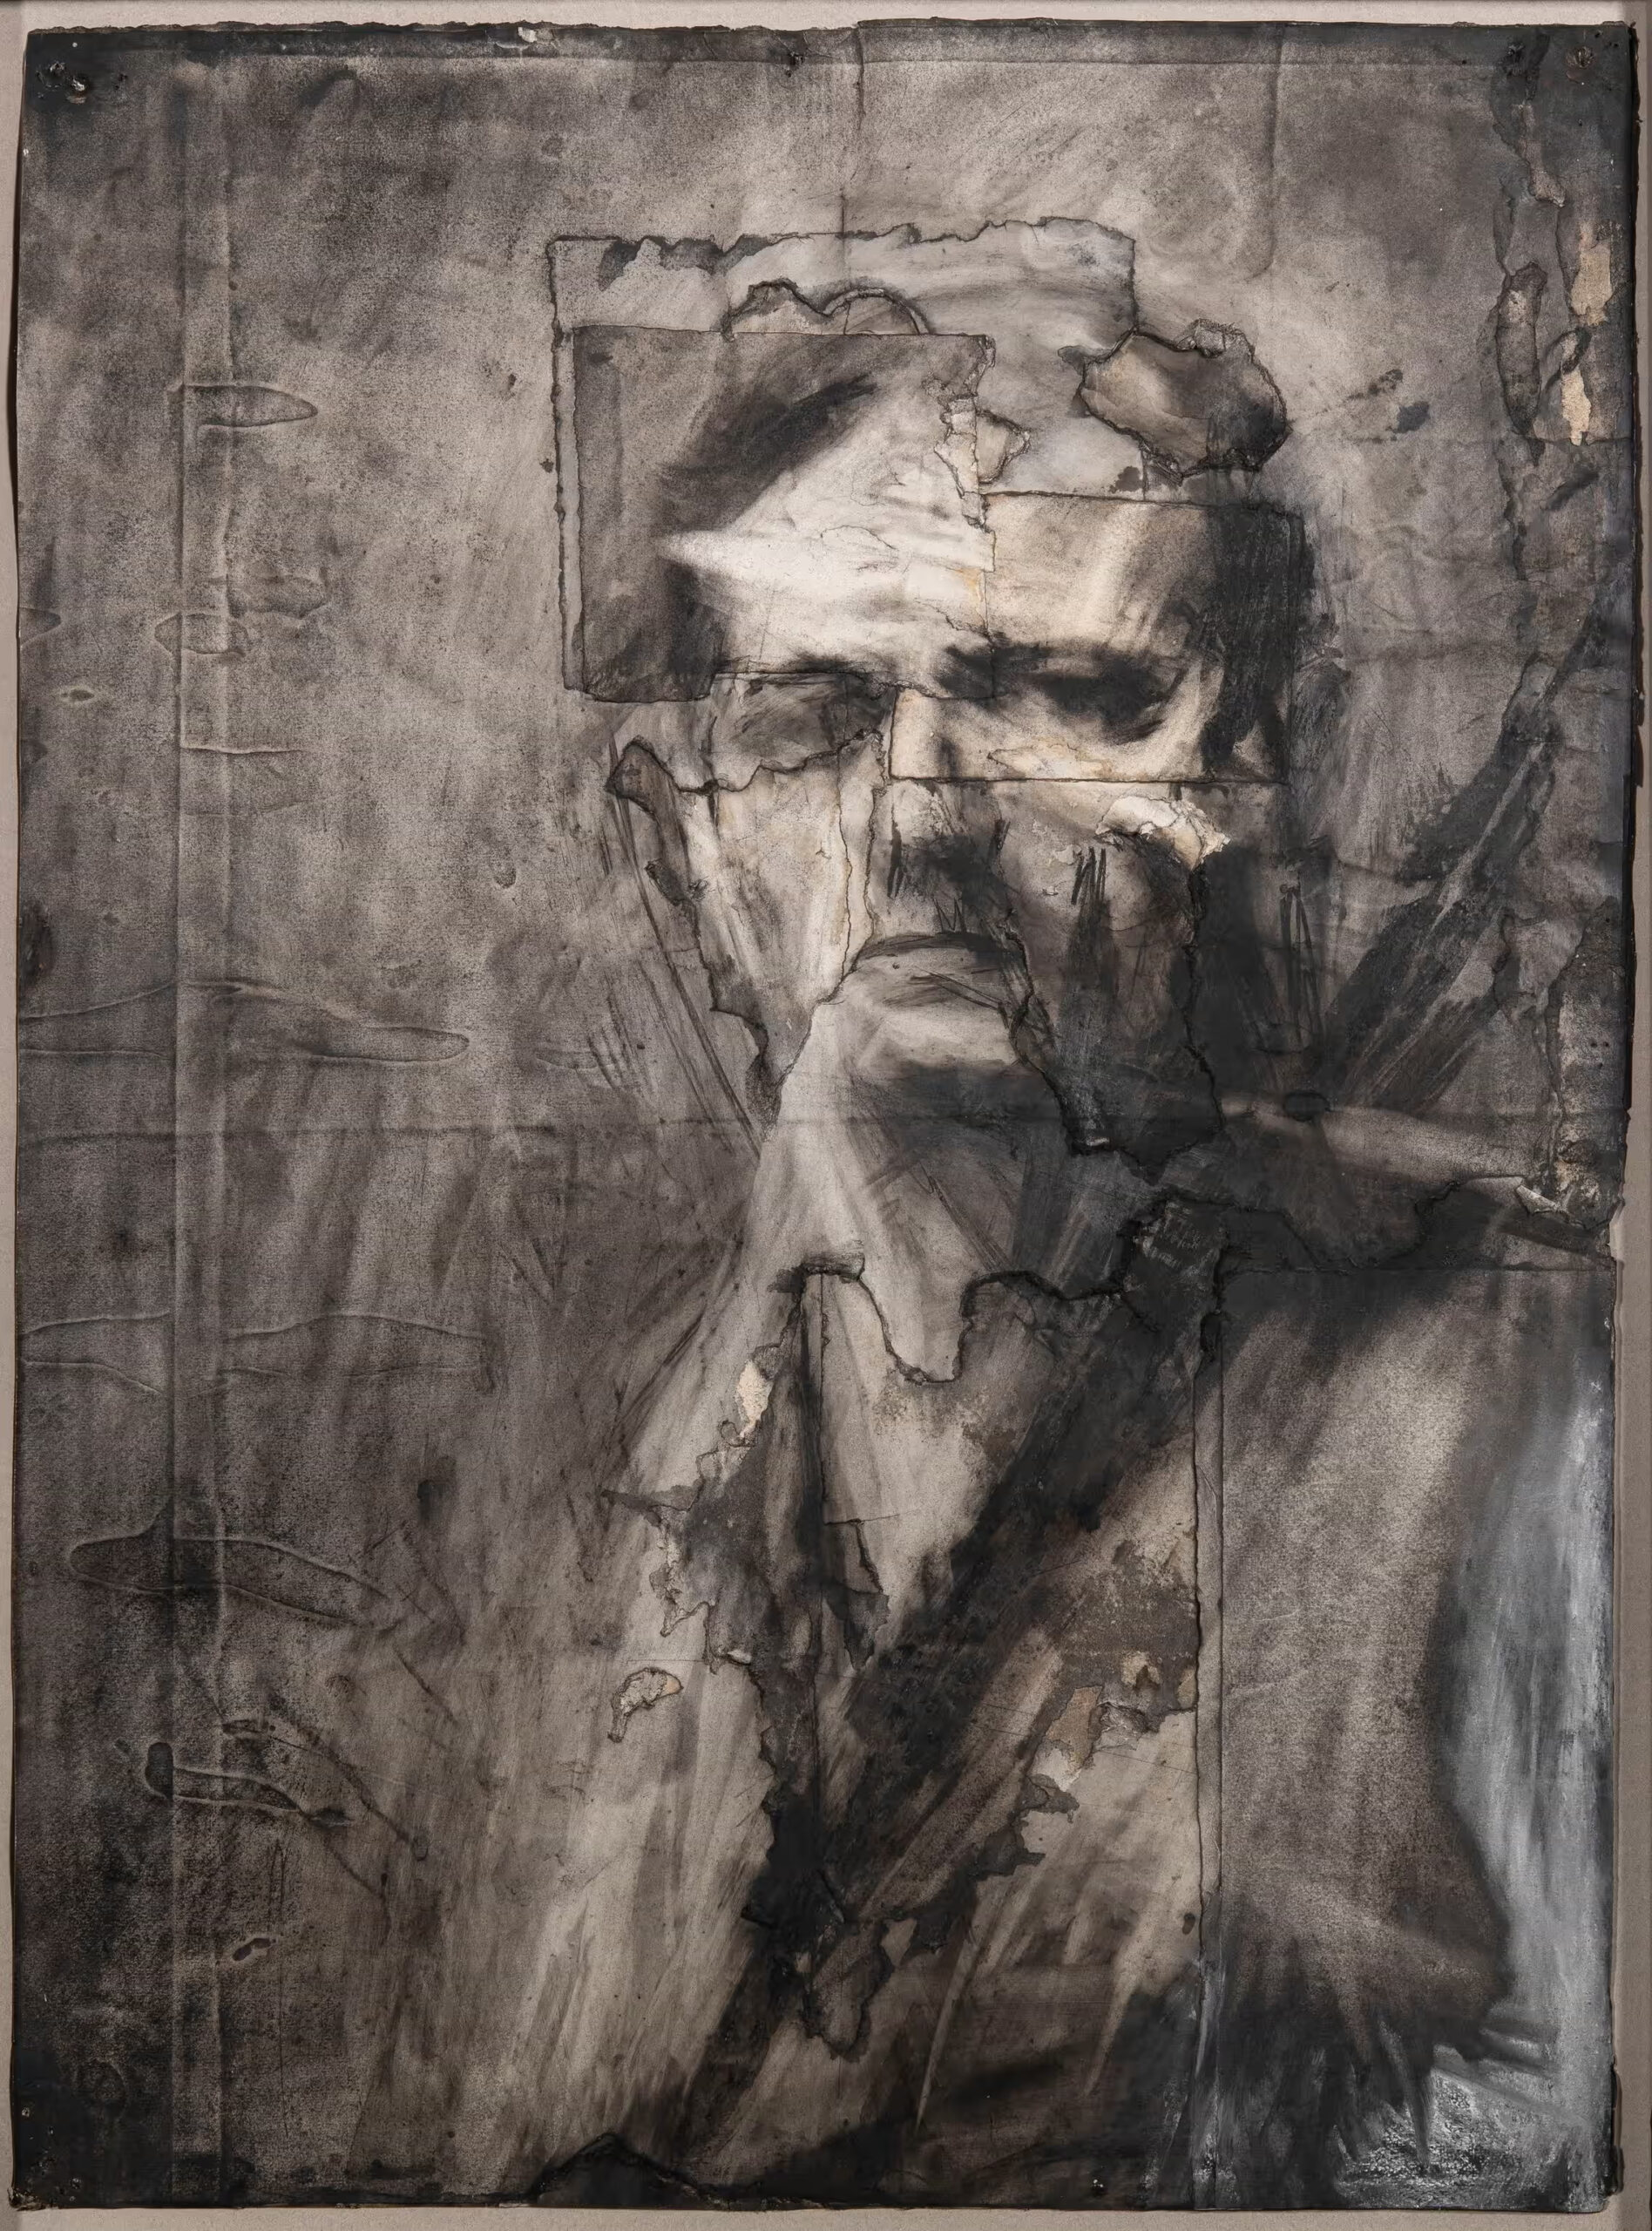 Frank Auerbach, Self-Portrait, kağıt üzerine kömür ve tebeşir, 30 1/4 x 22 1/4 inç, 1958, The Charcoal Heads, The Courtauld Gallery, Fotoğraf: courtesy of Frankie Rossi Art Projects, London